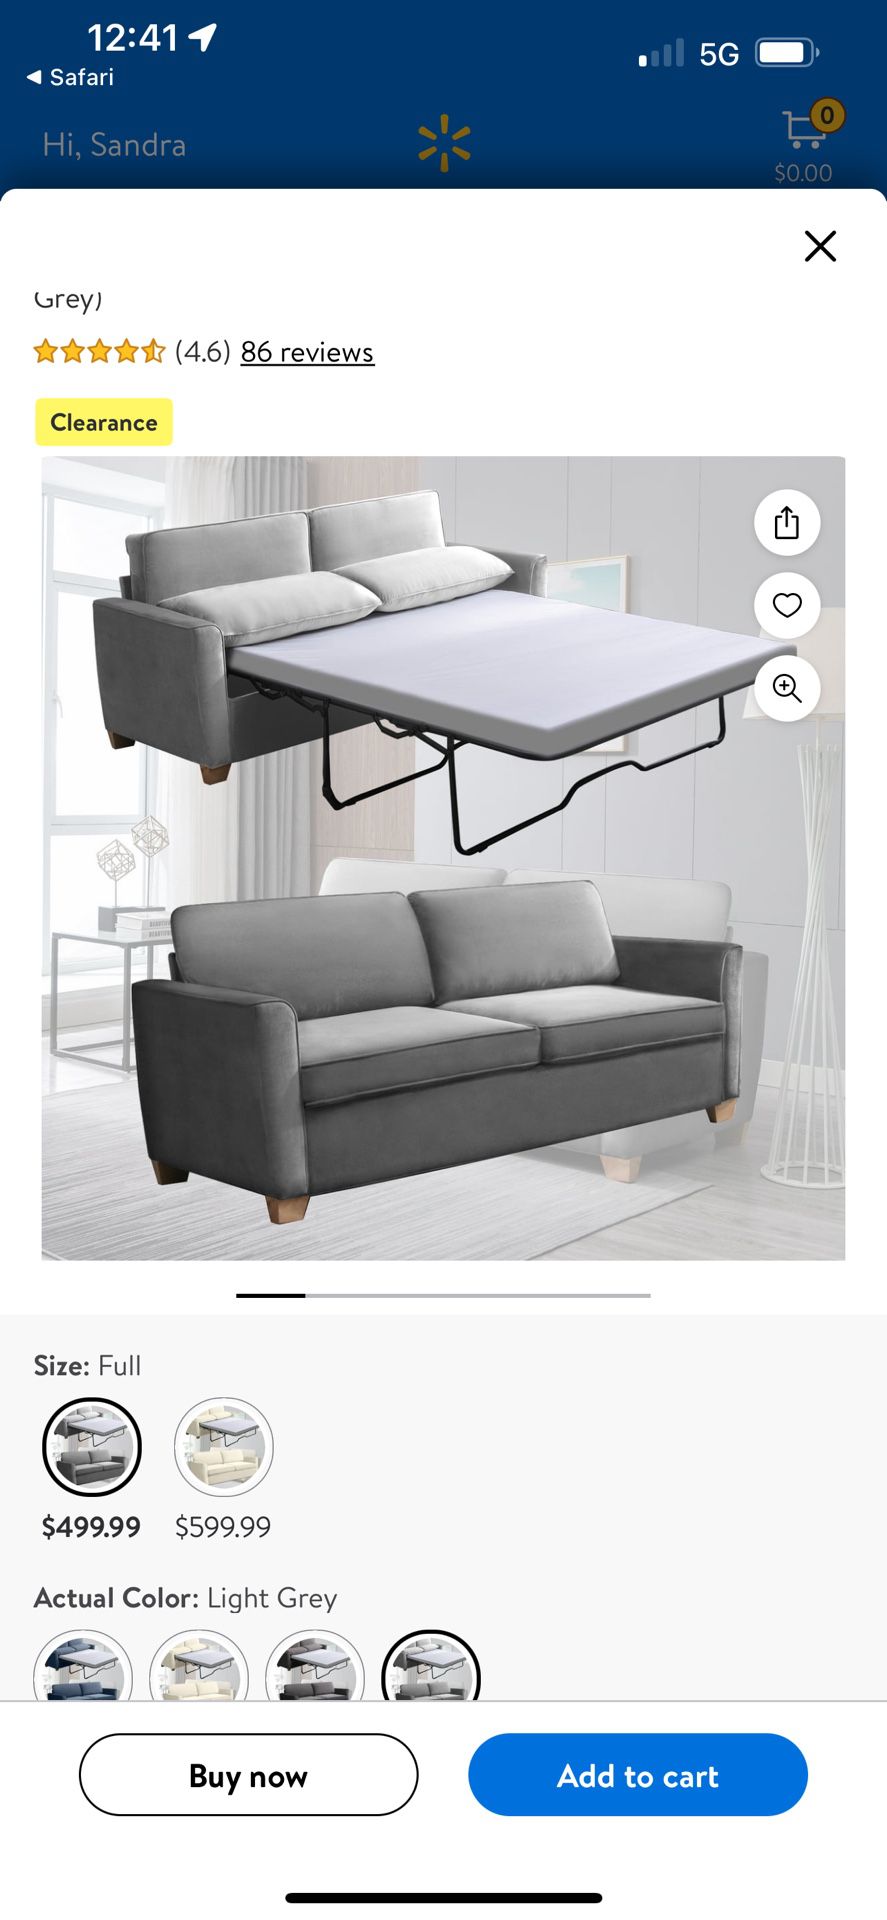 Gray LoveSeat - Full Size Bed Sofa 2 Seats